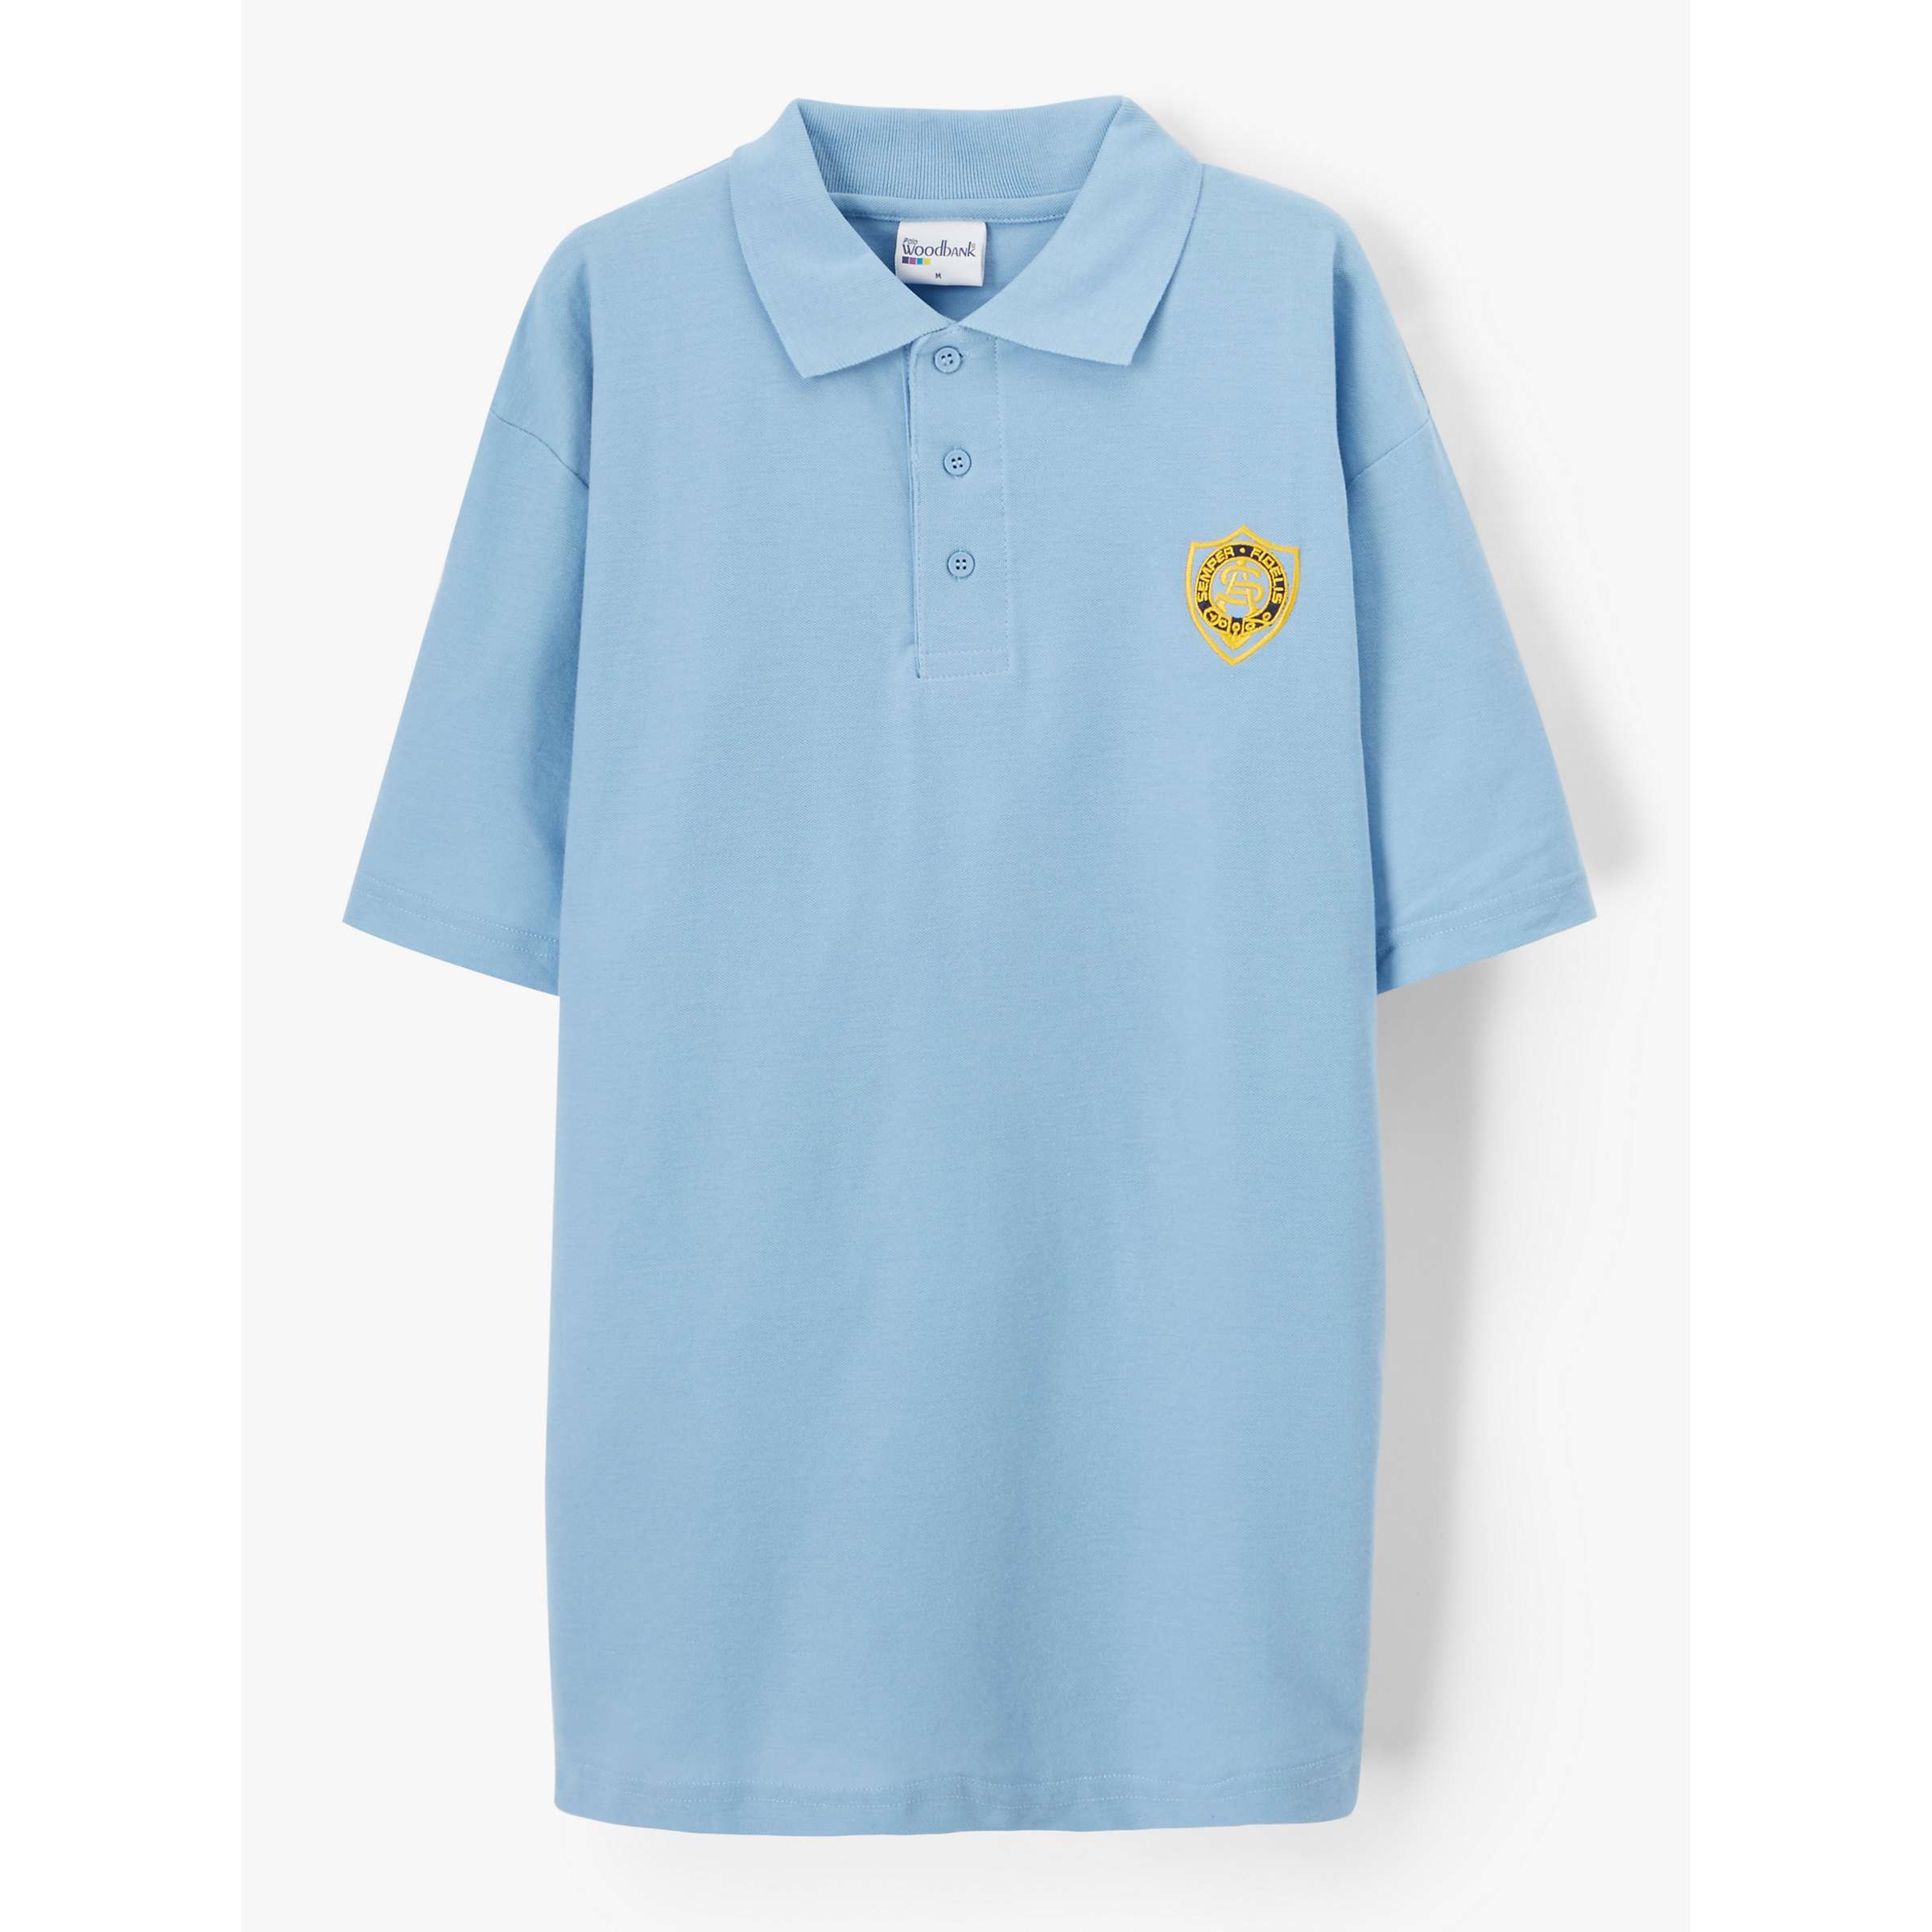 Buy St Anne's Catholic School Girls' Polo Shirt, Blue Online at johnlewis.com